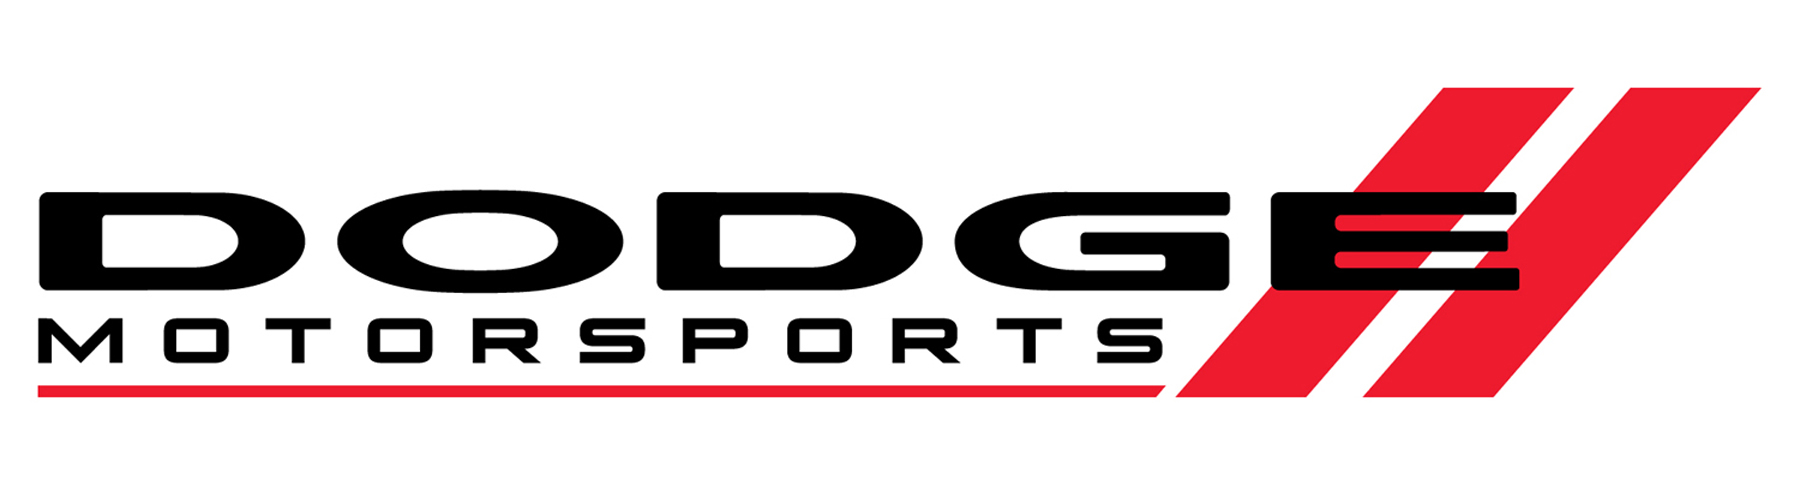 Dodge Motorsports Racing Logo